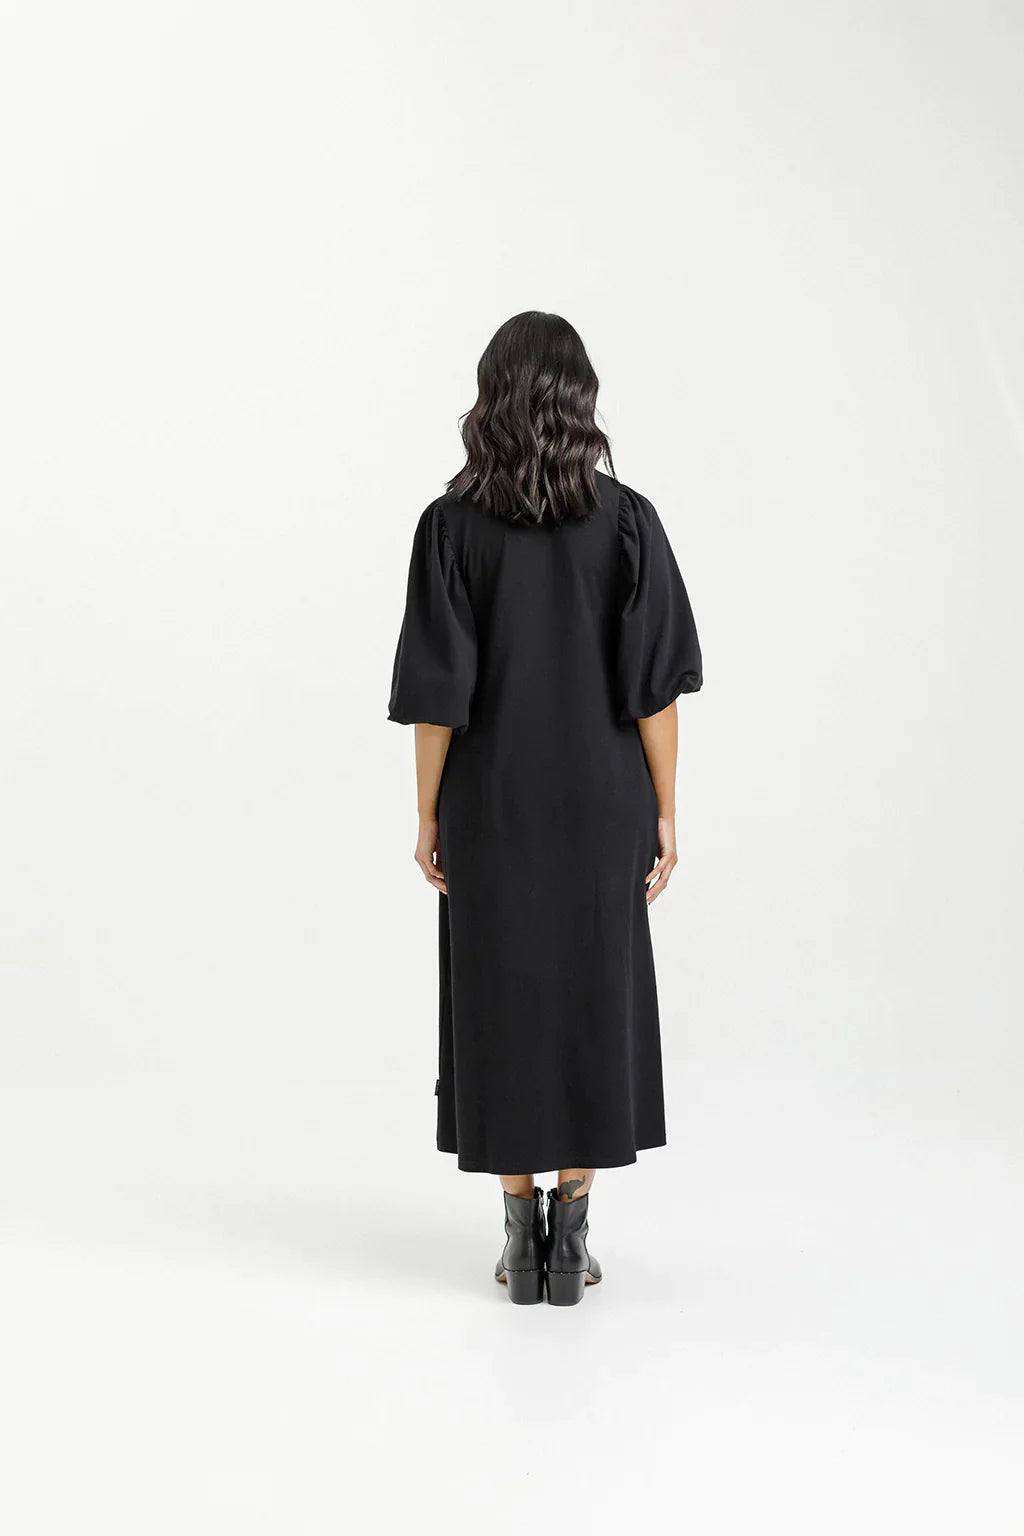 Home-Lee | Black - Ivy Midi Dress